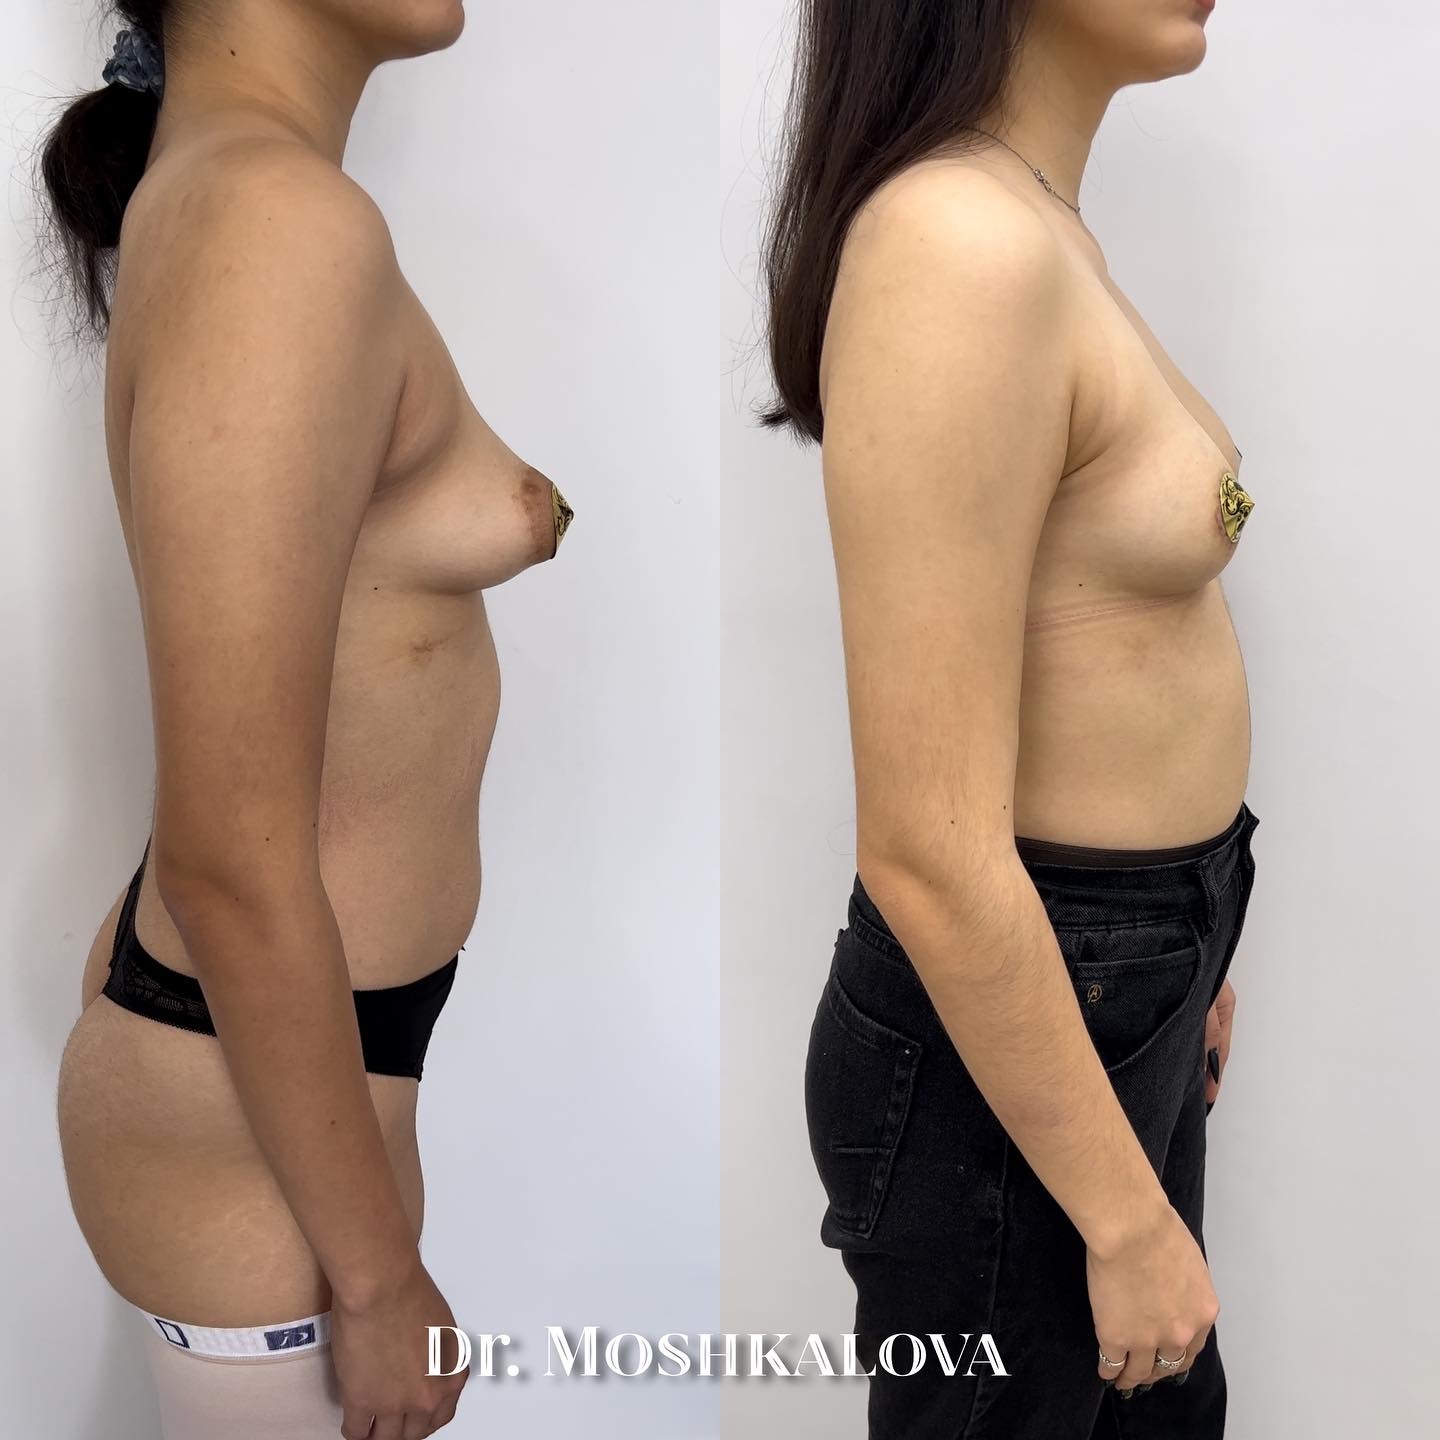 тубулярная форма груди у женщин фото 13